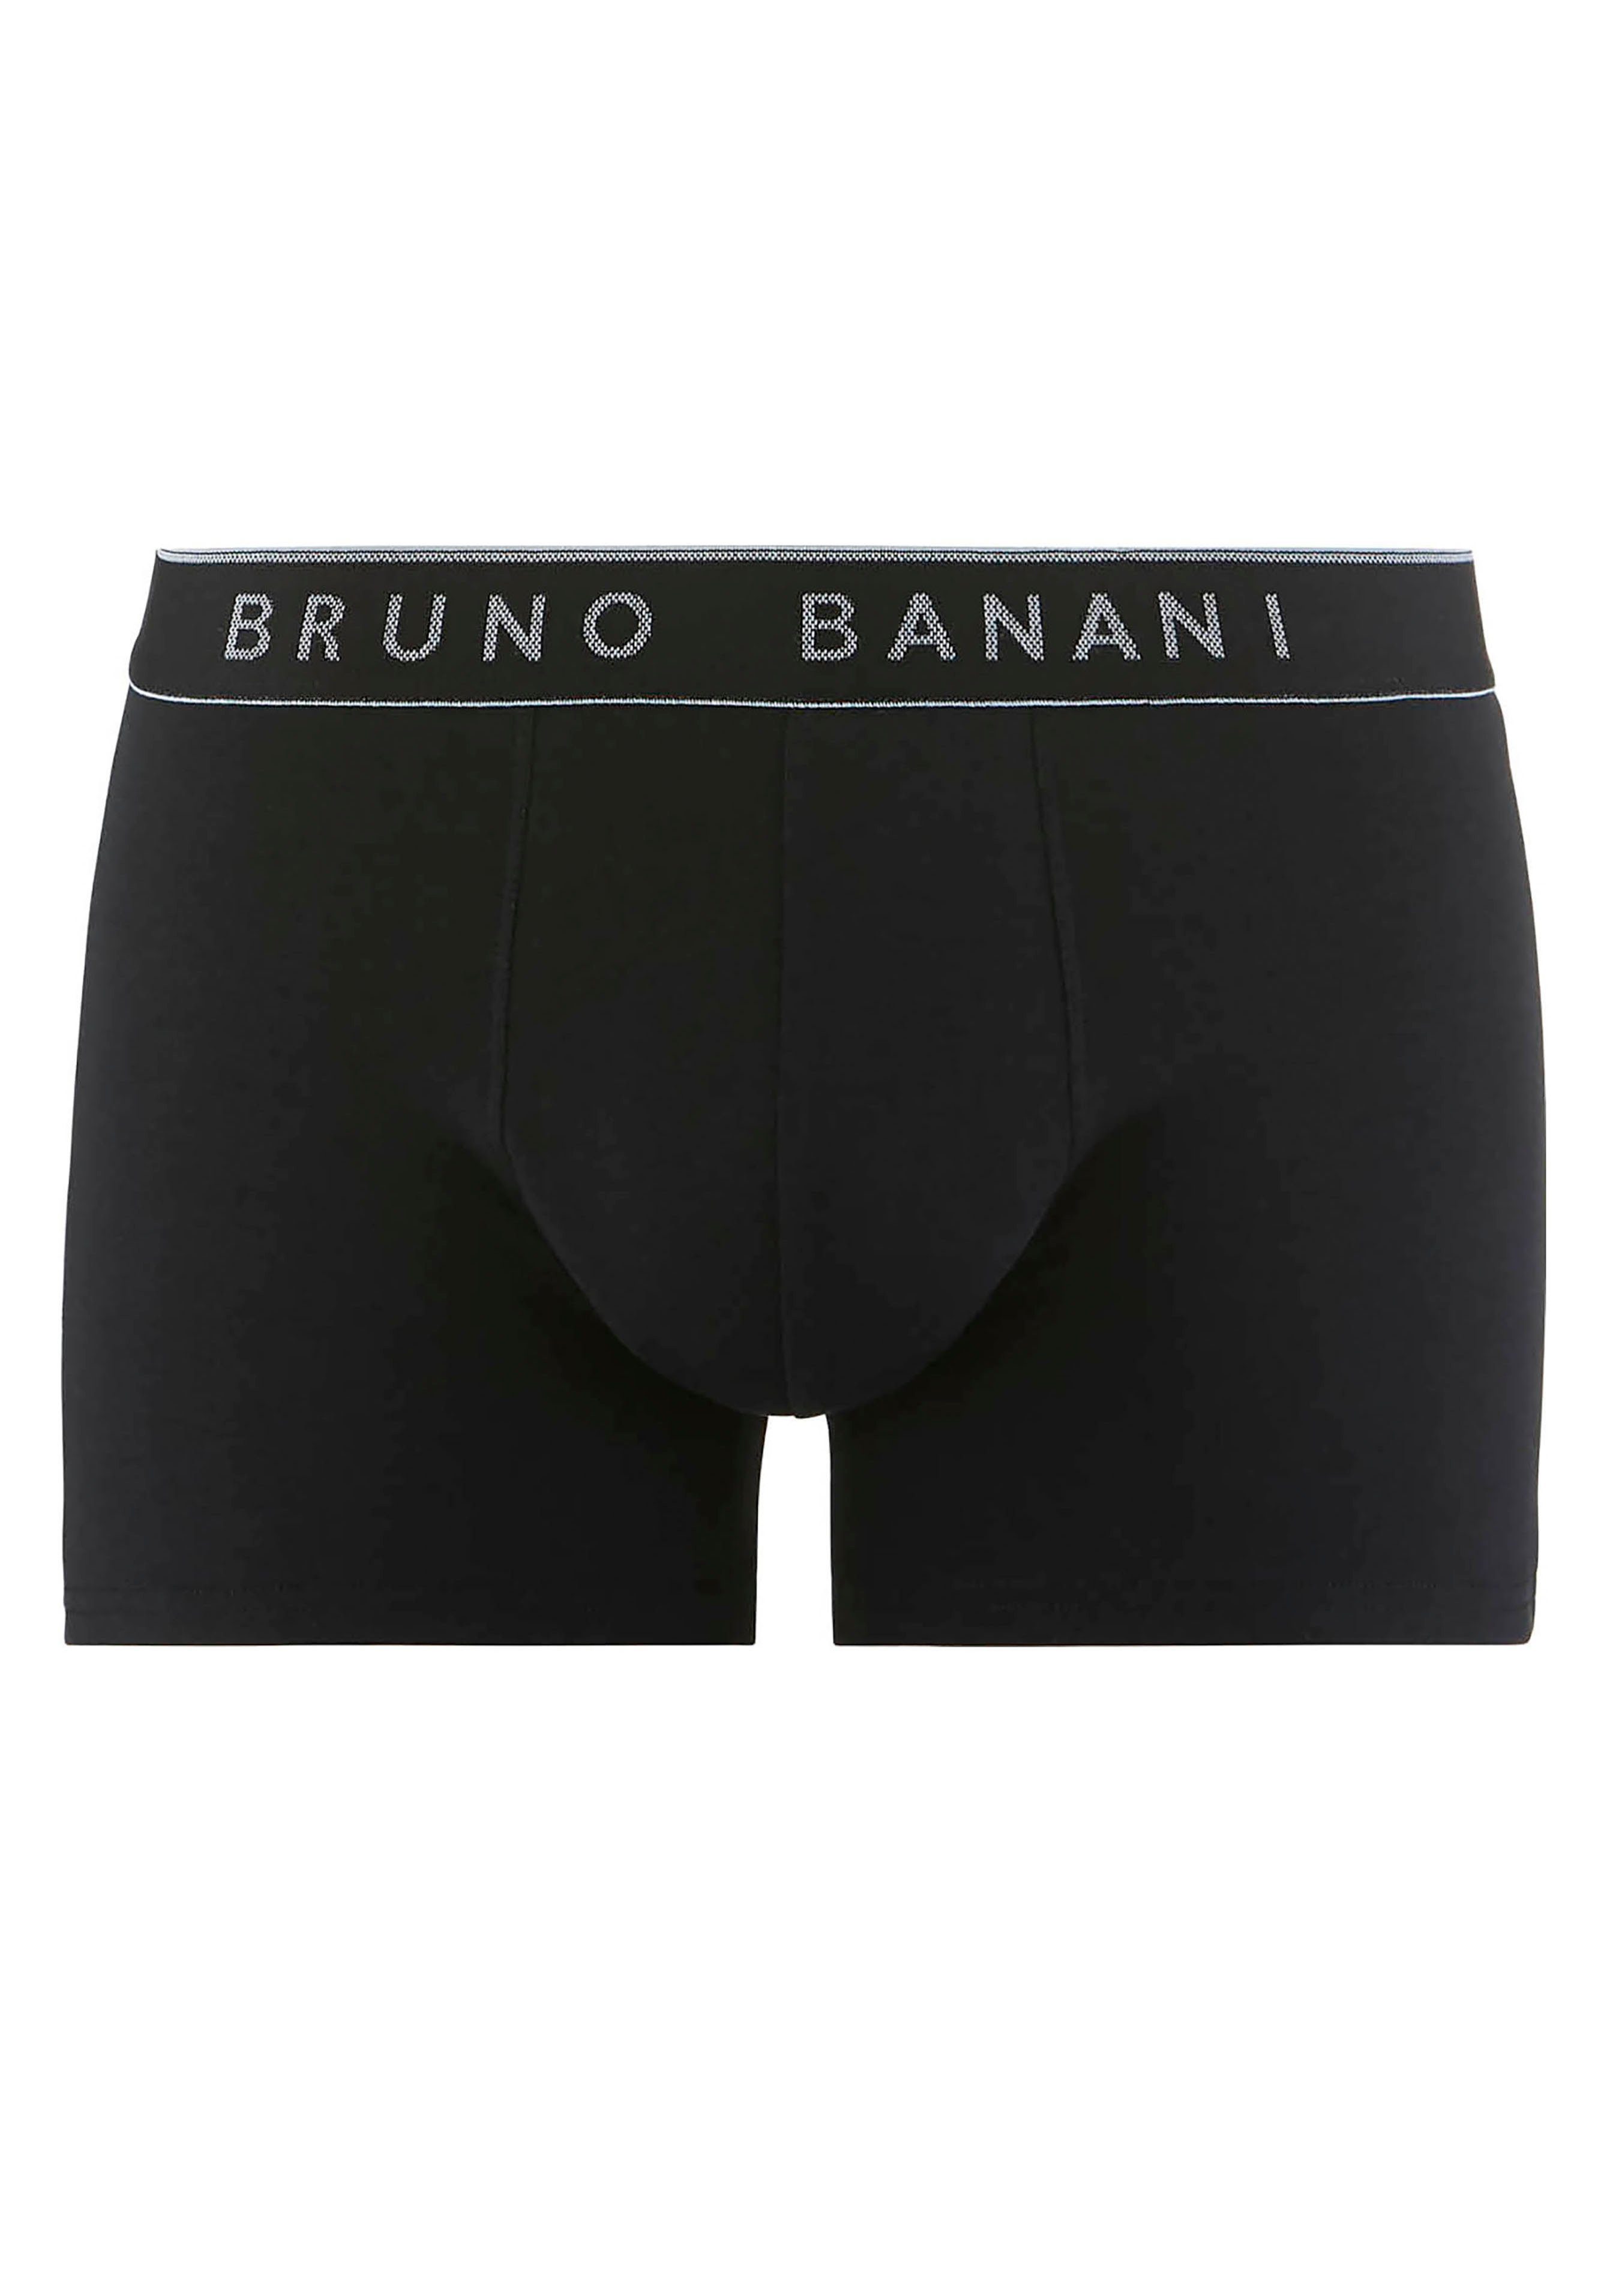 2-St) Boxer Bruno (Packung, Banani